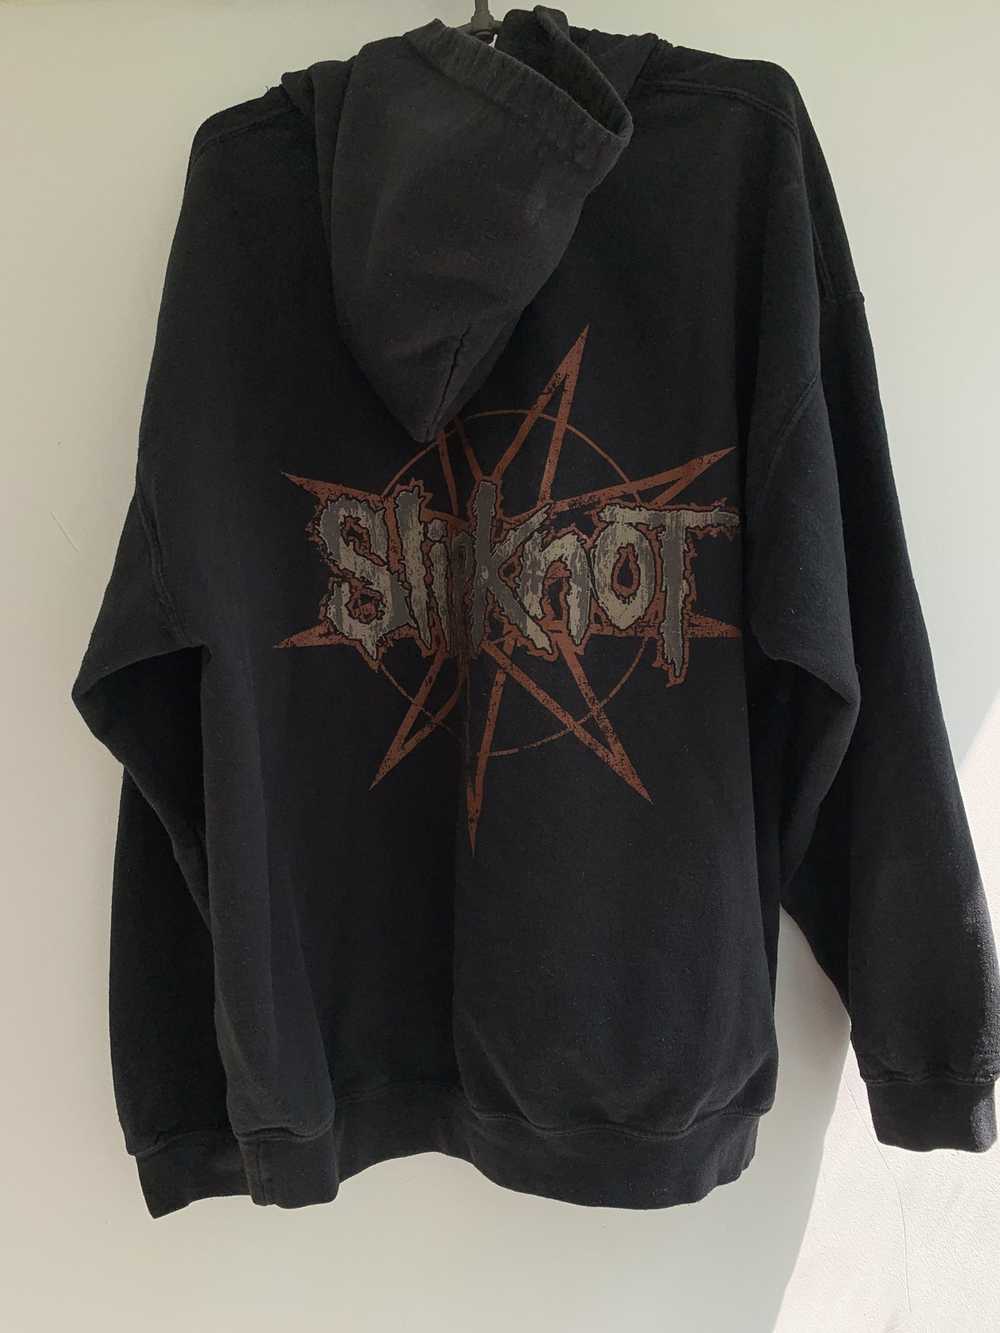 Slipknot Slipknot vintage hoodie the gray chapter - image 6